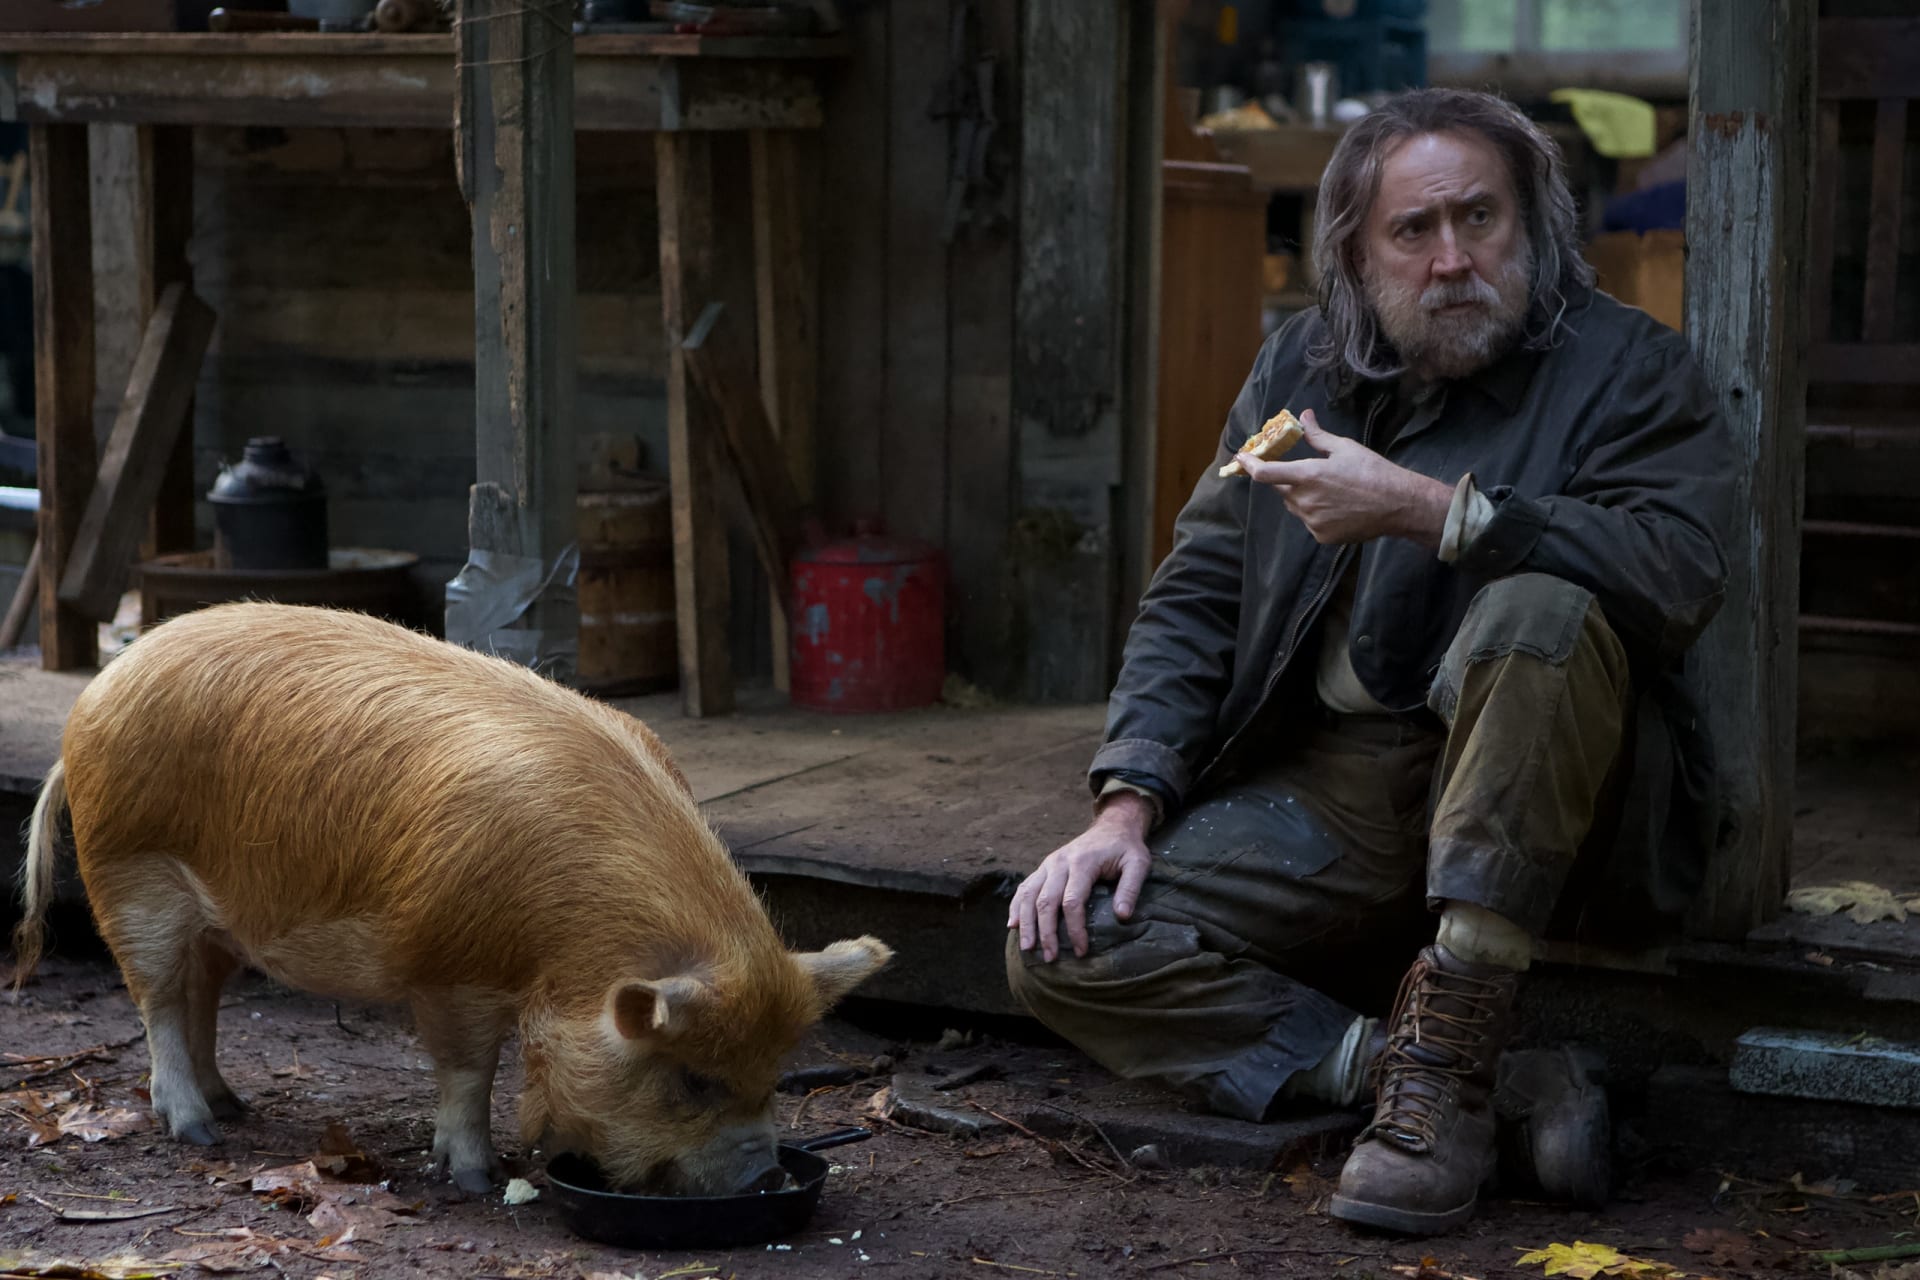 Pig, starring Nicolas Cage